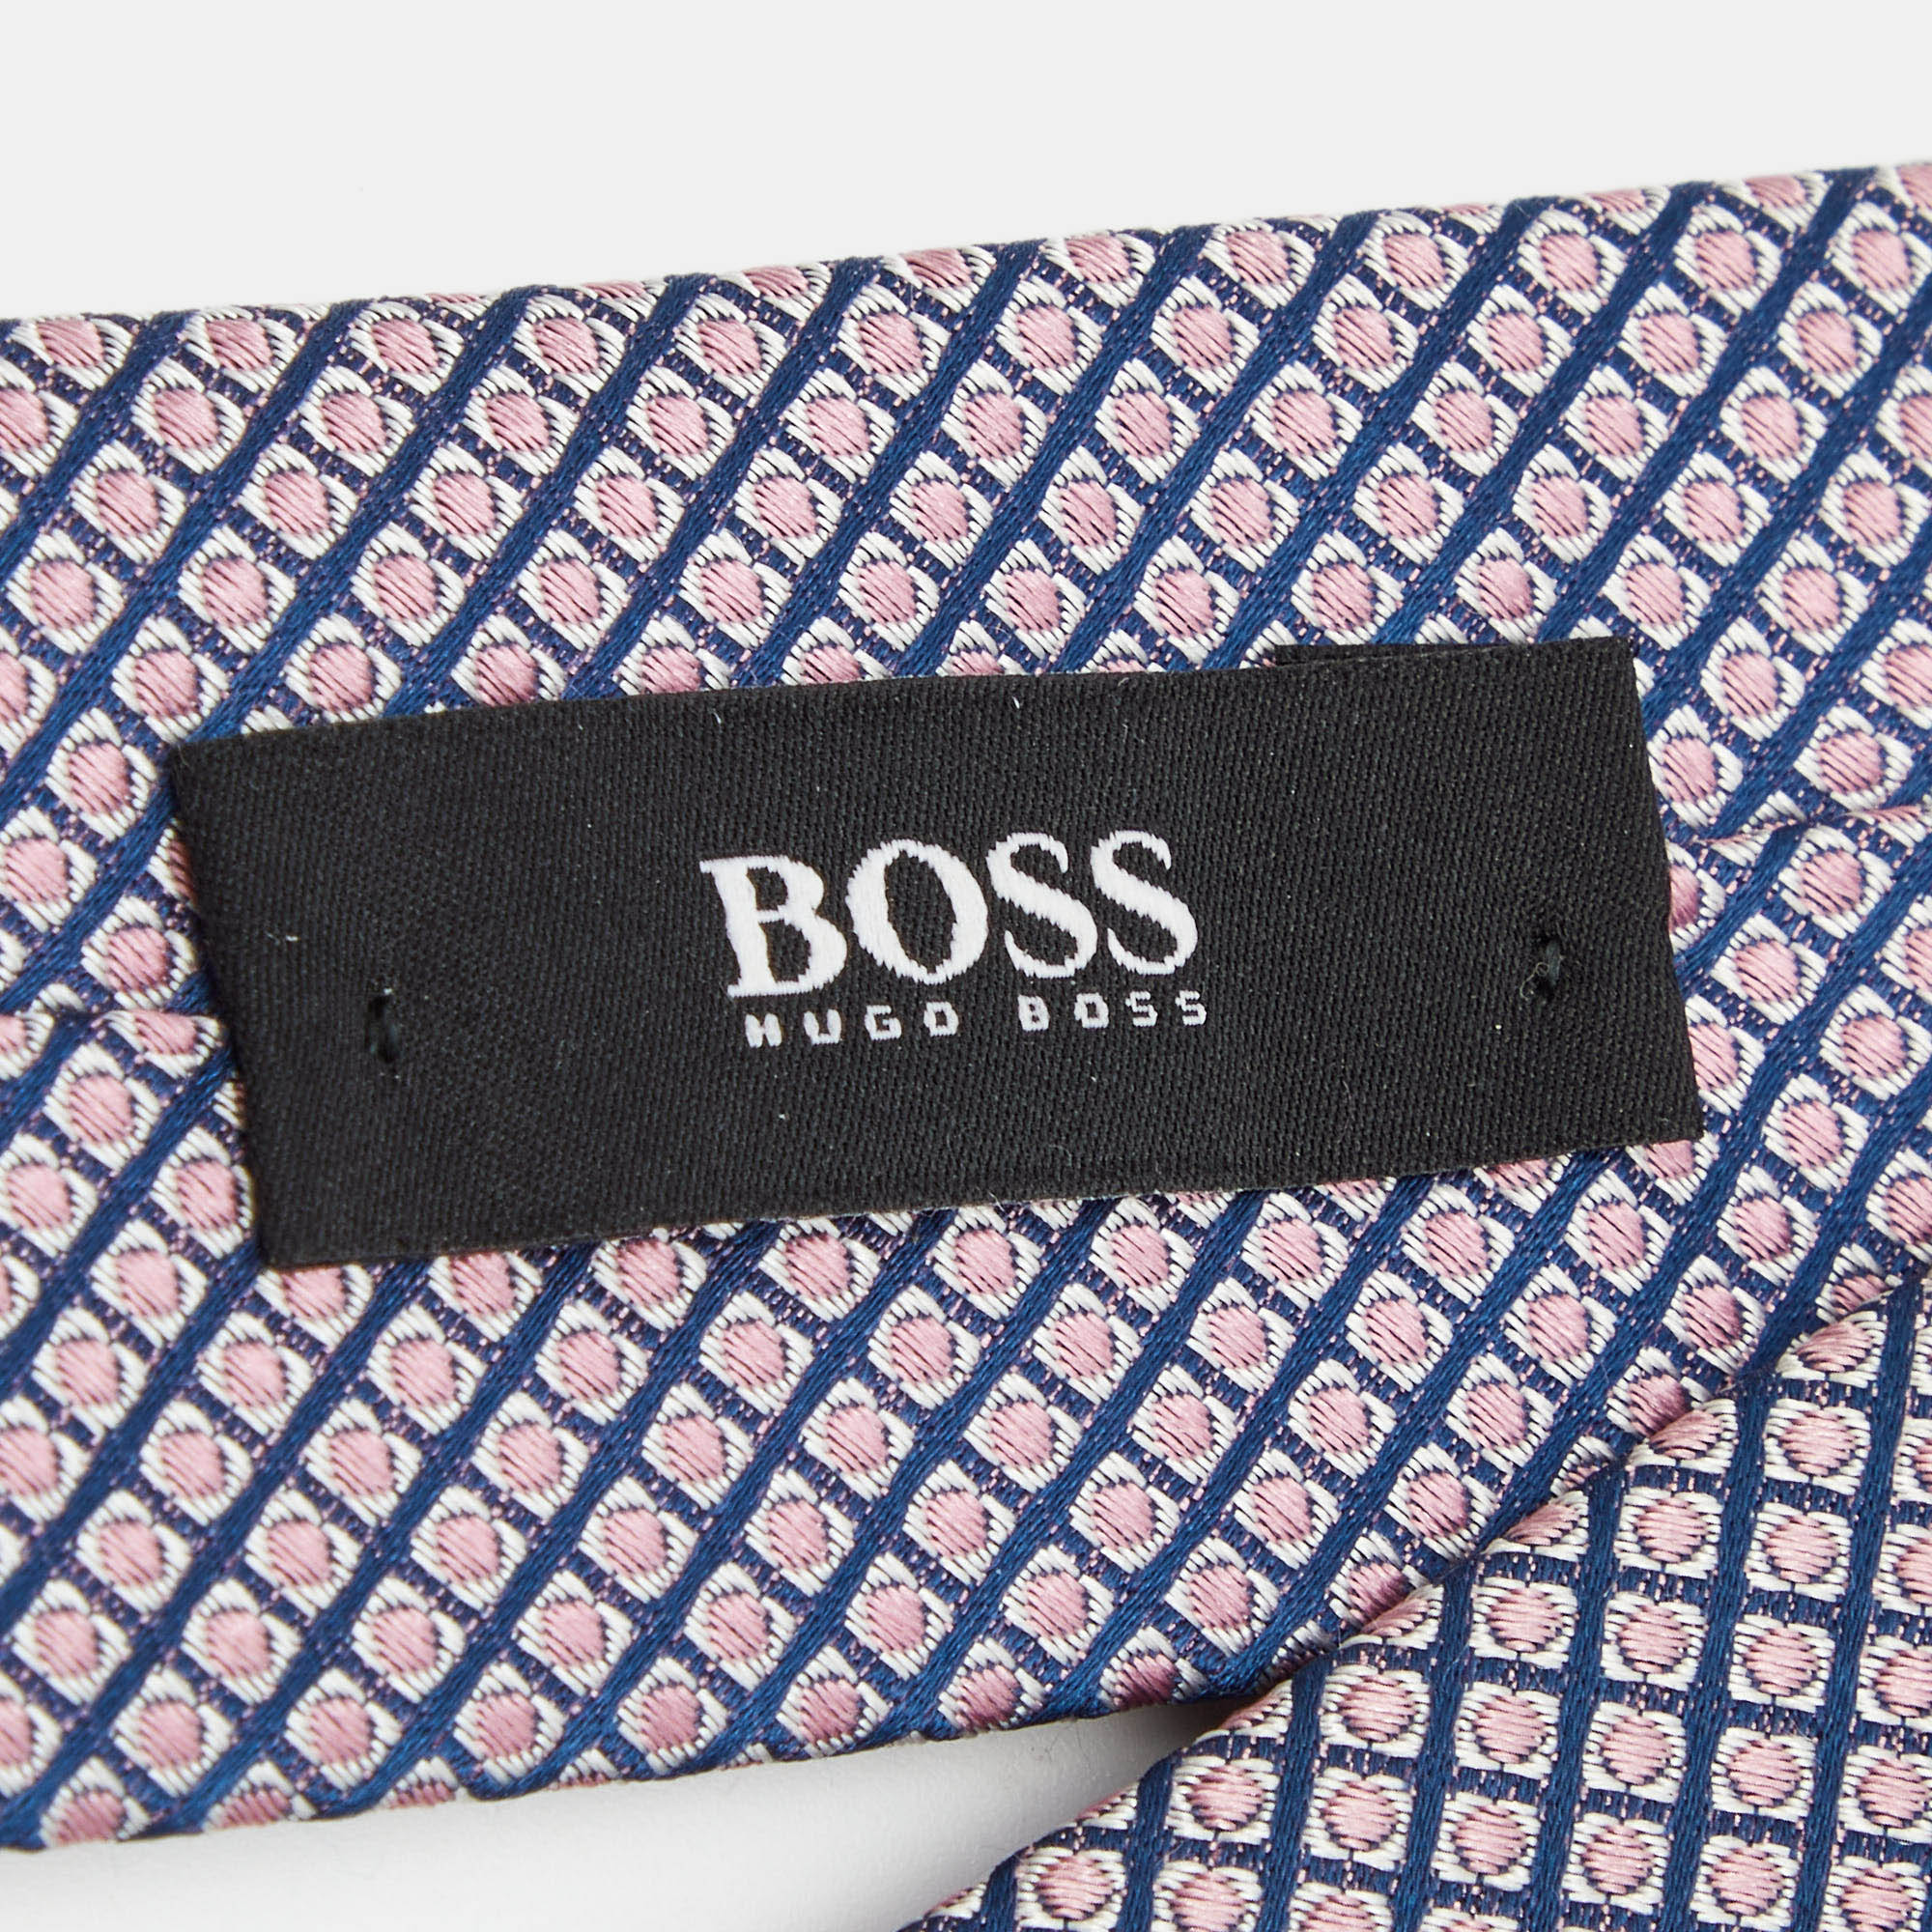 Boss By Hugo Boss Navy Blue/Pink Patterned Silk Tie